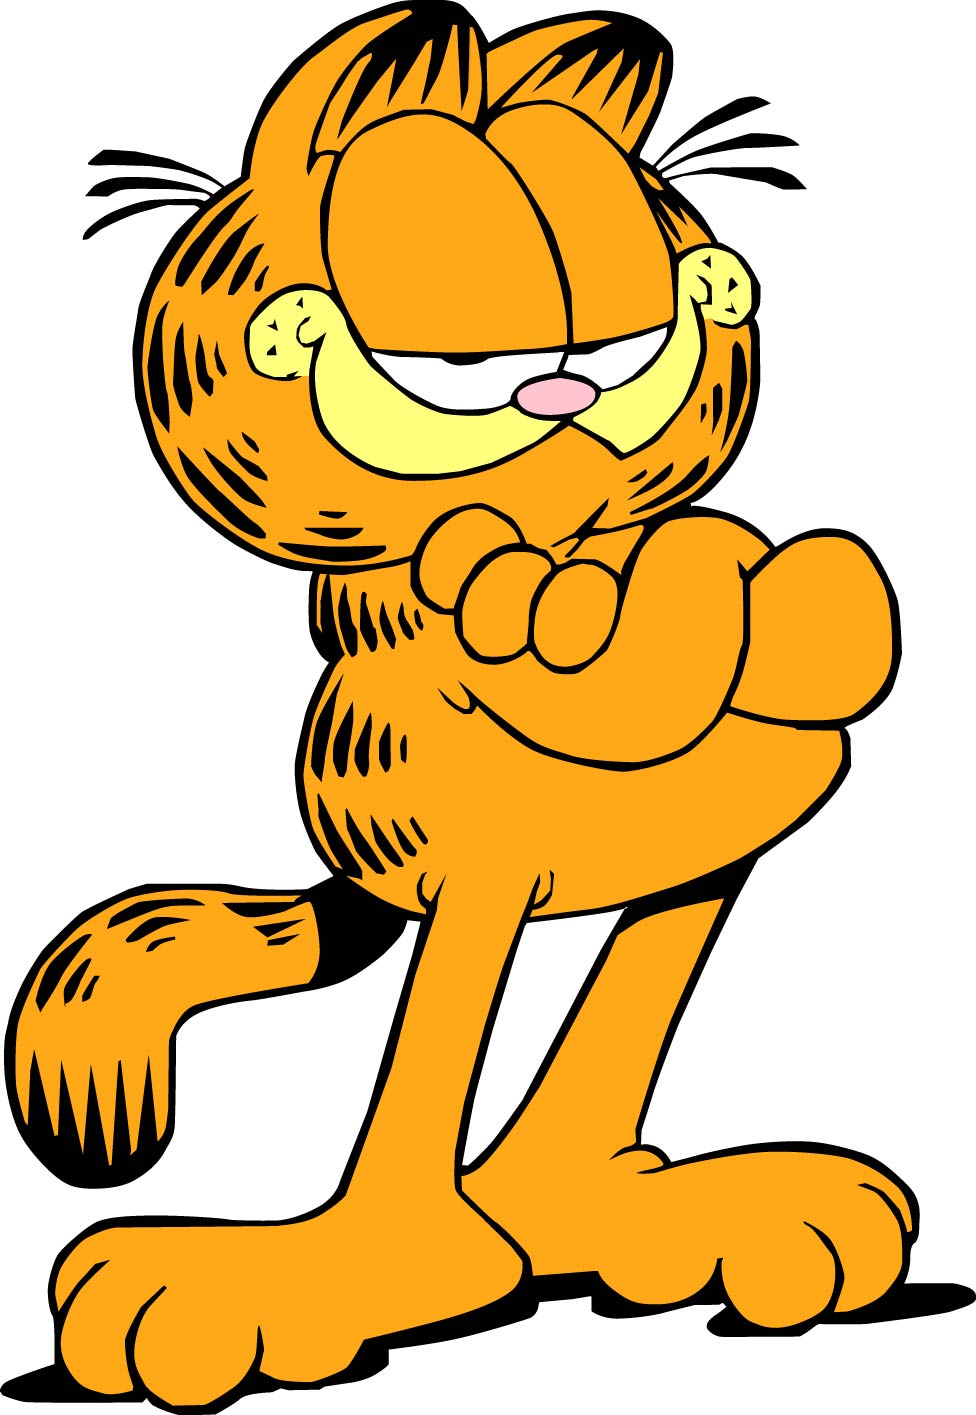 Download Garfield Live Wallpaper Hd Backgrounds Download - roblox garfield